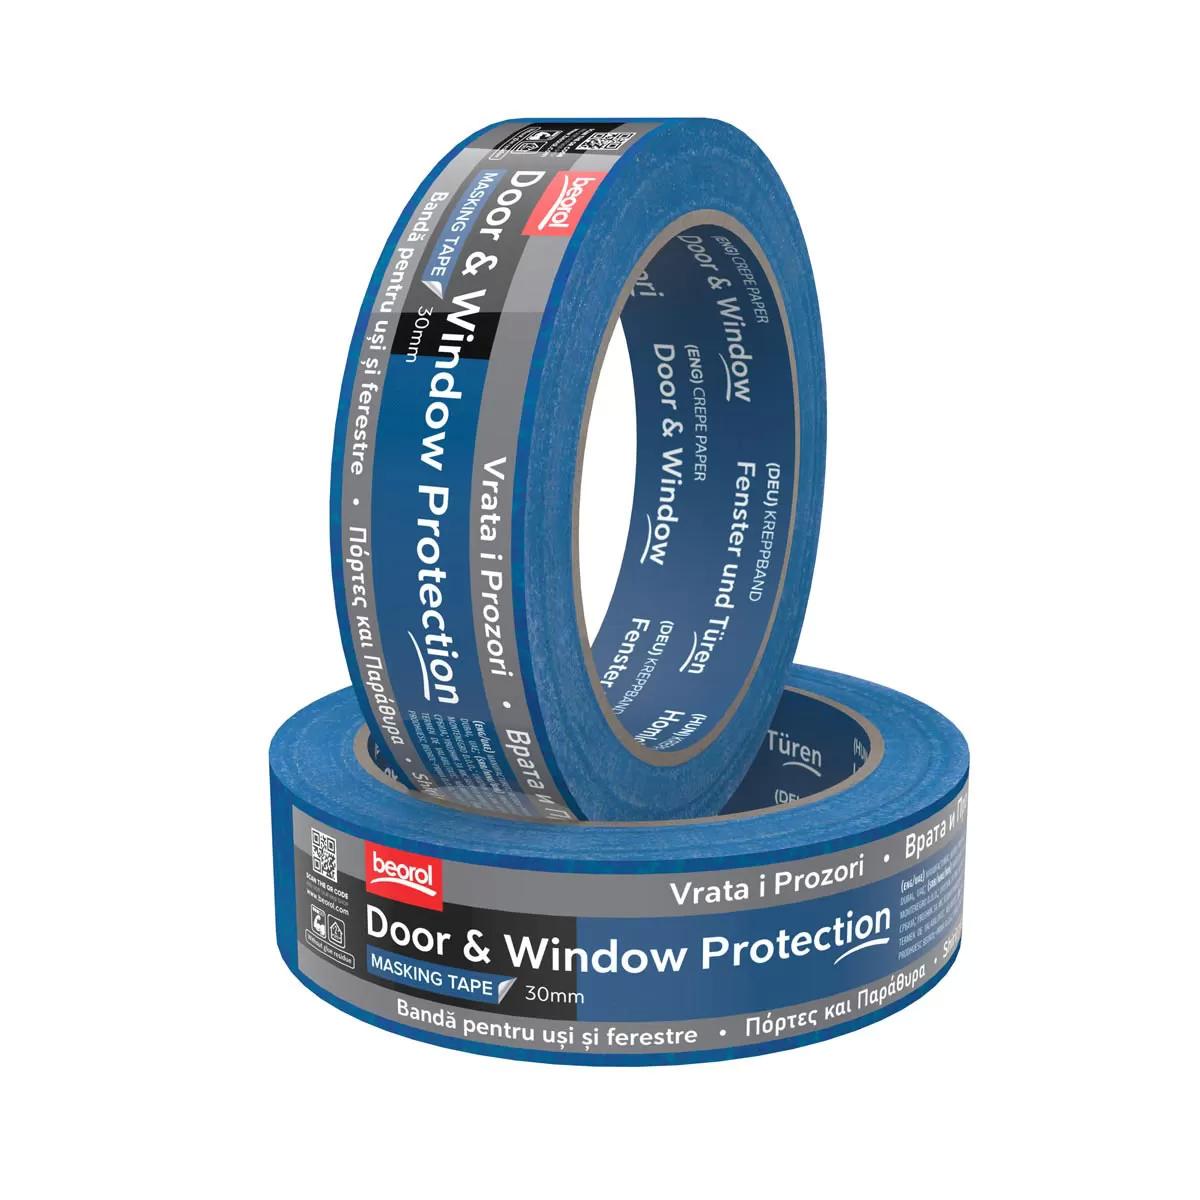 Masking tape Door & Window protection 30mm x 50m 